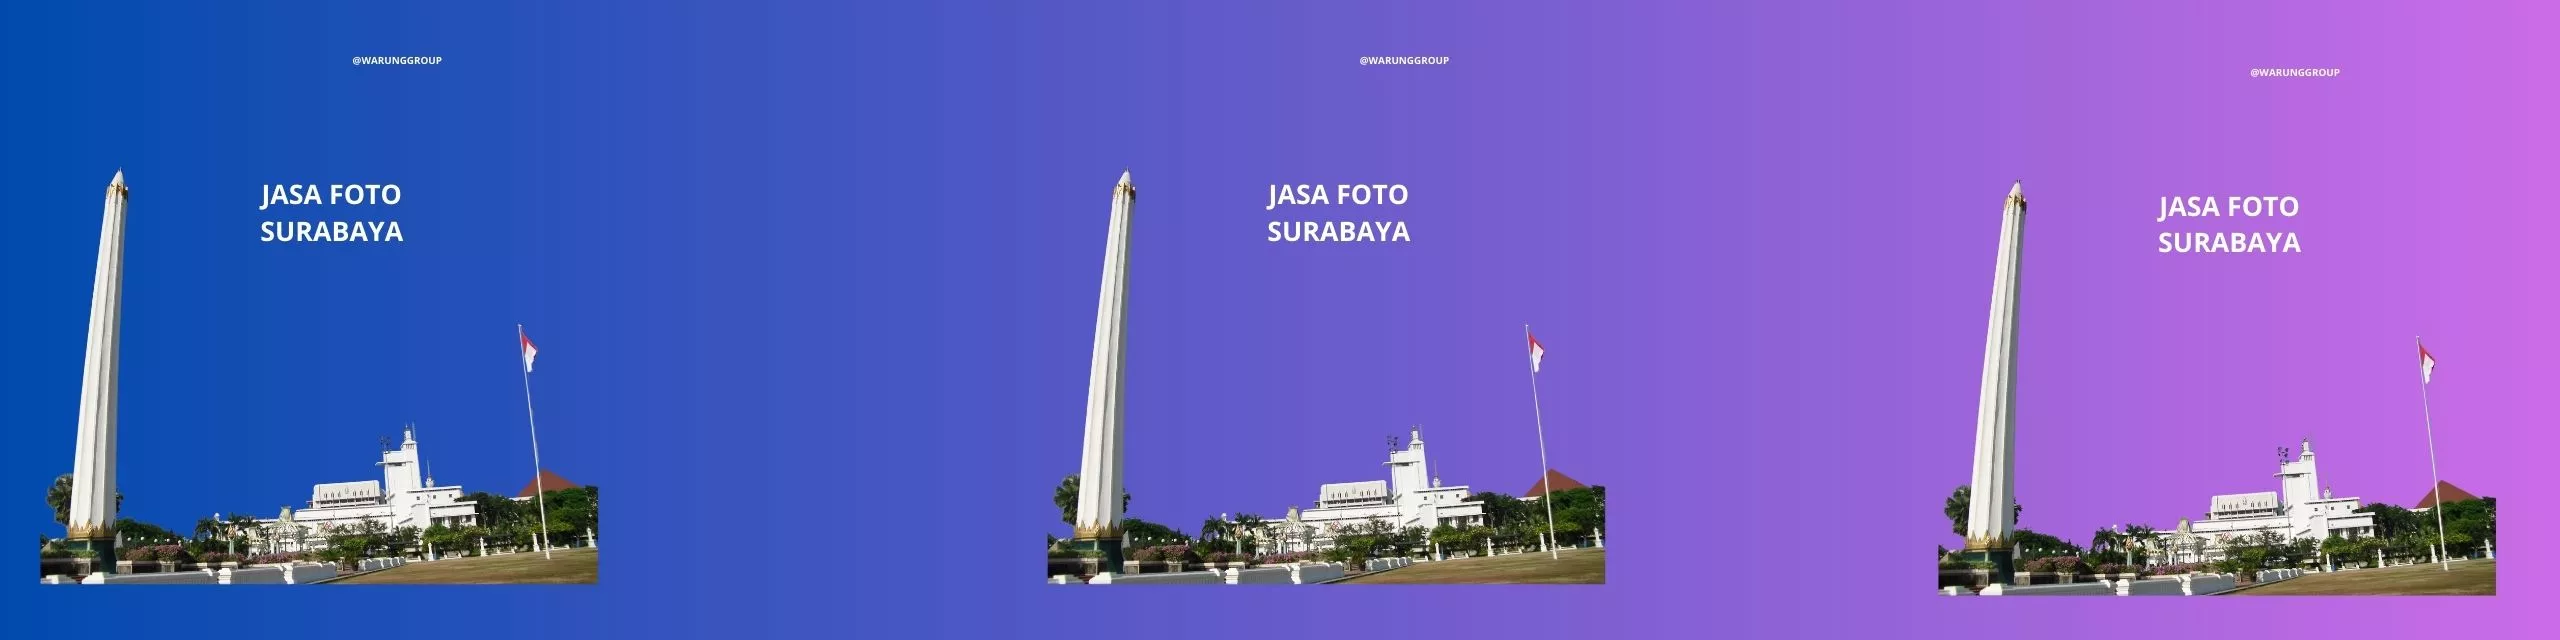 Jasa Foto Surabaya